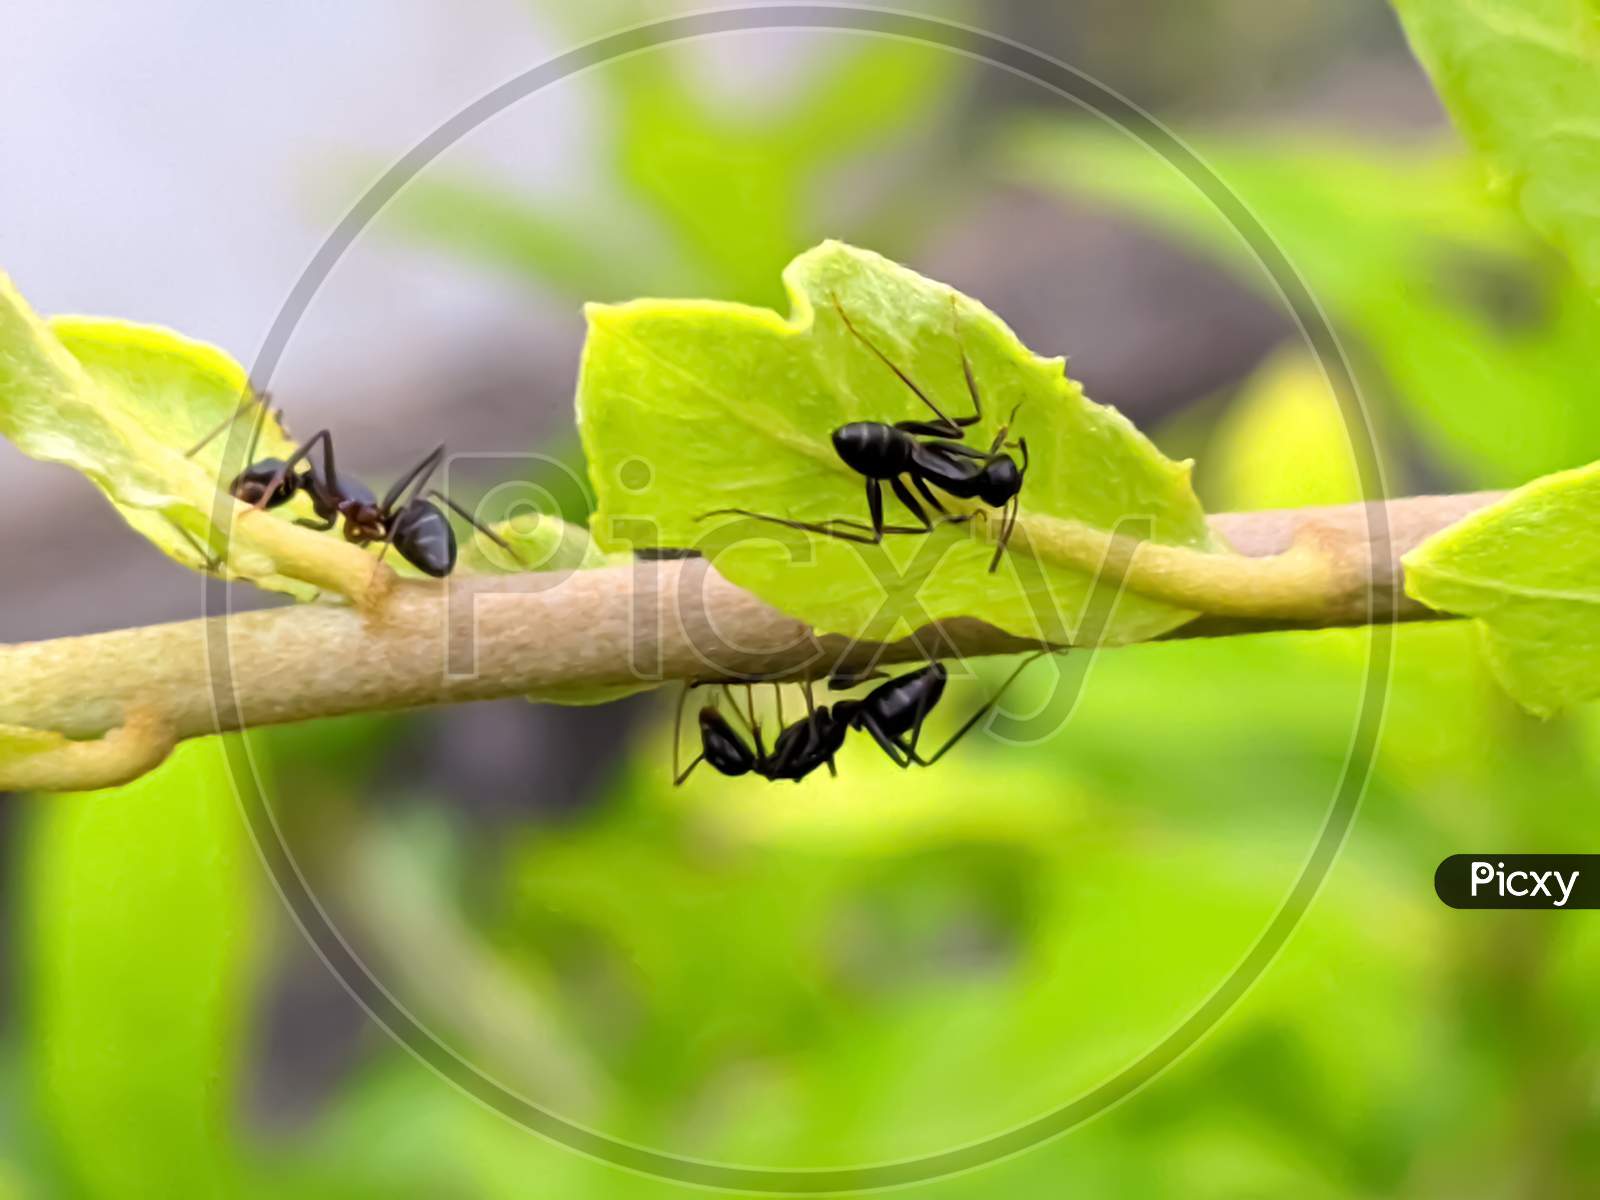 ant garden ant's on leaf